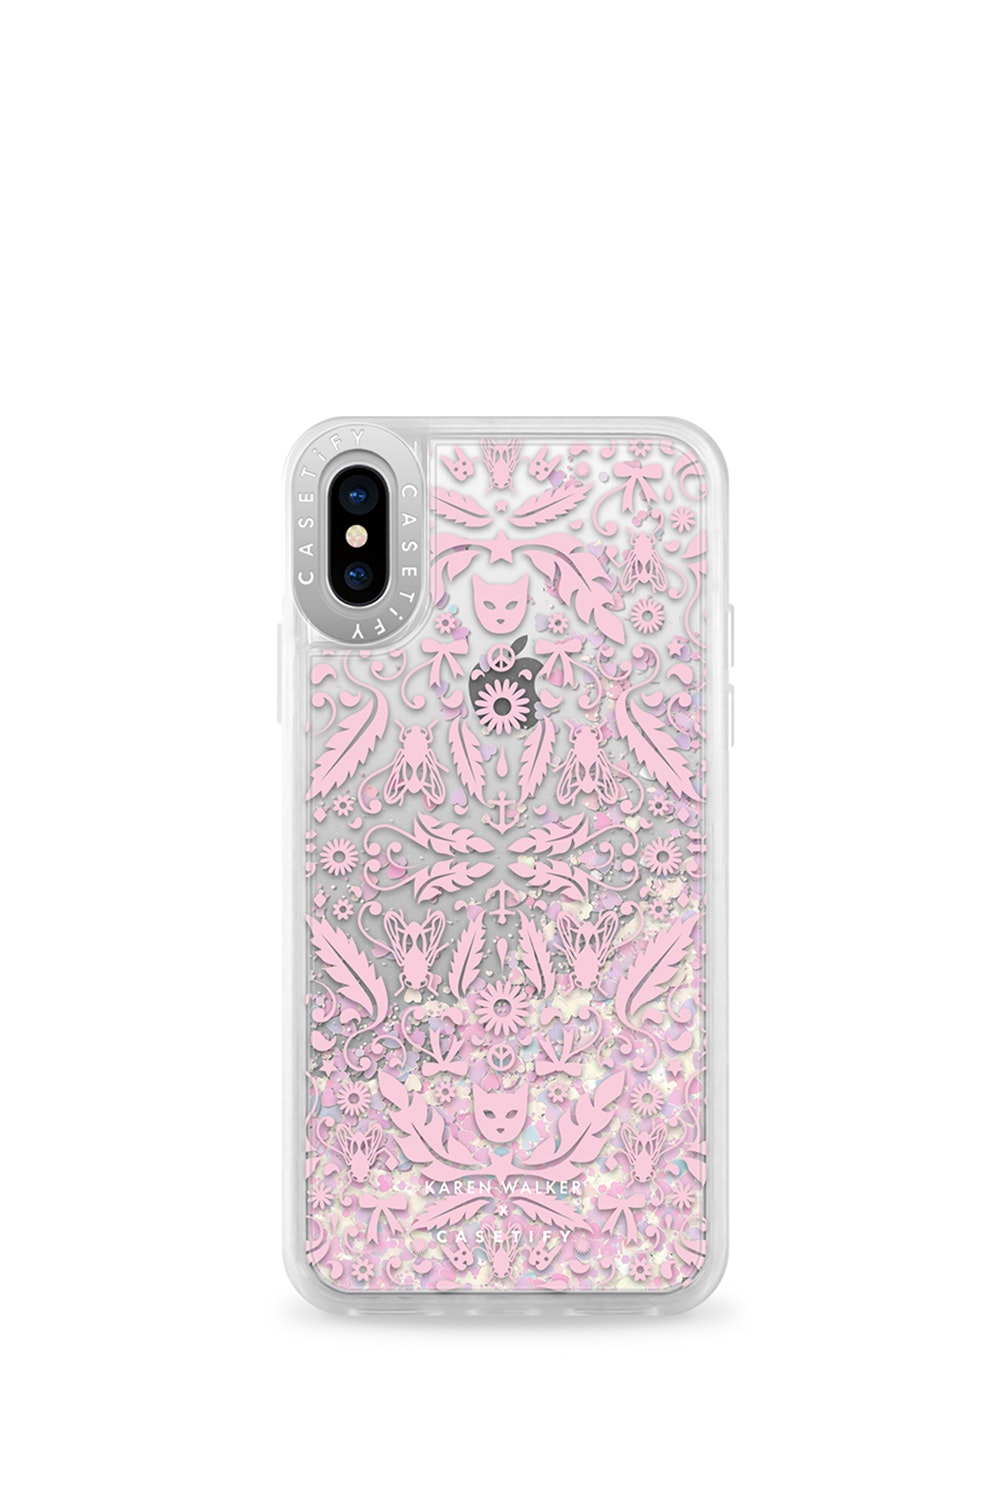 Casetify x karen Walker Filigree glitter iPhone case, $70 from Karen Walker